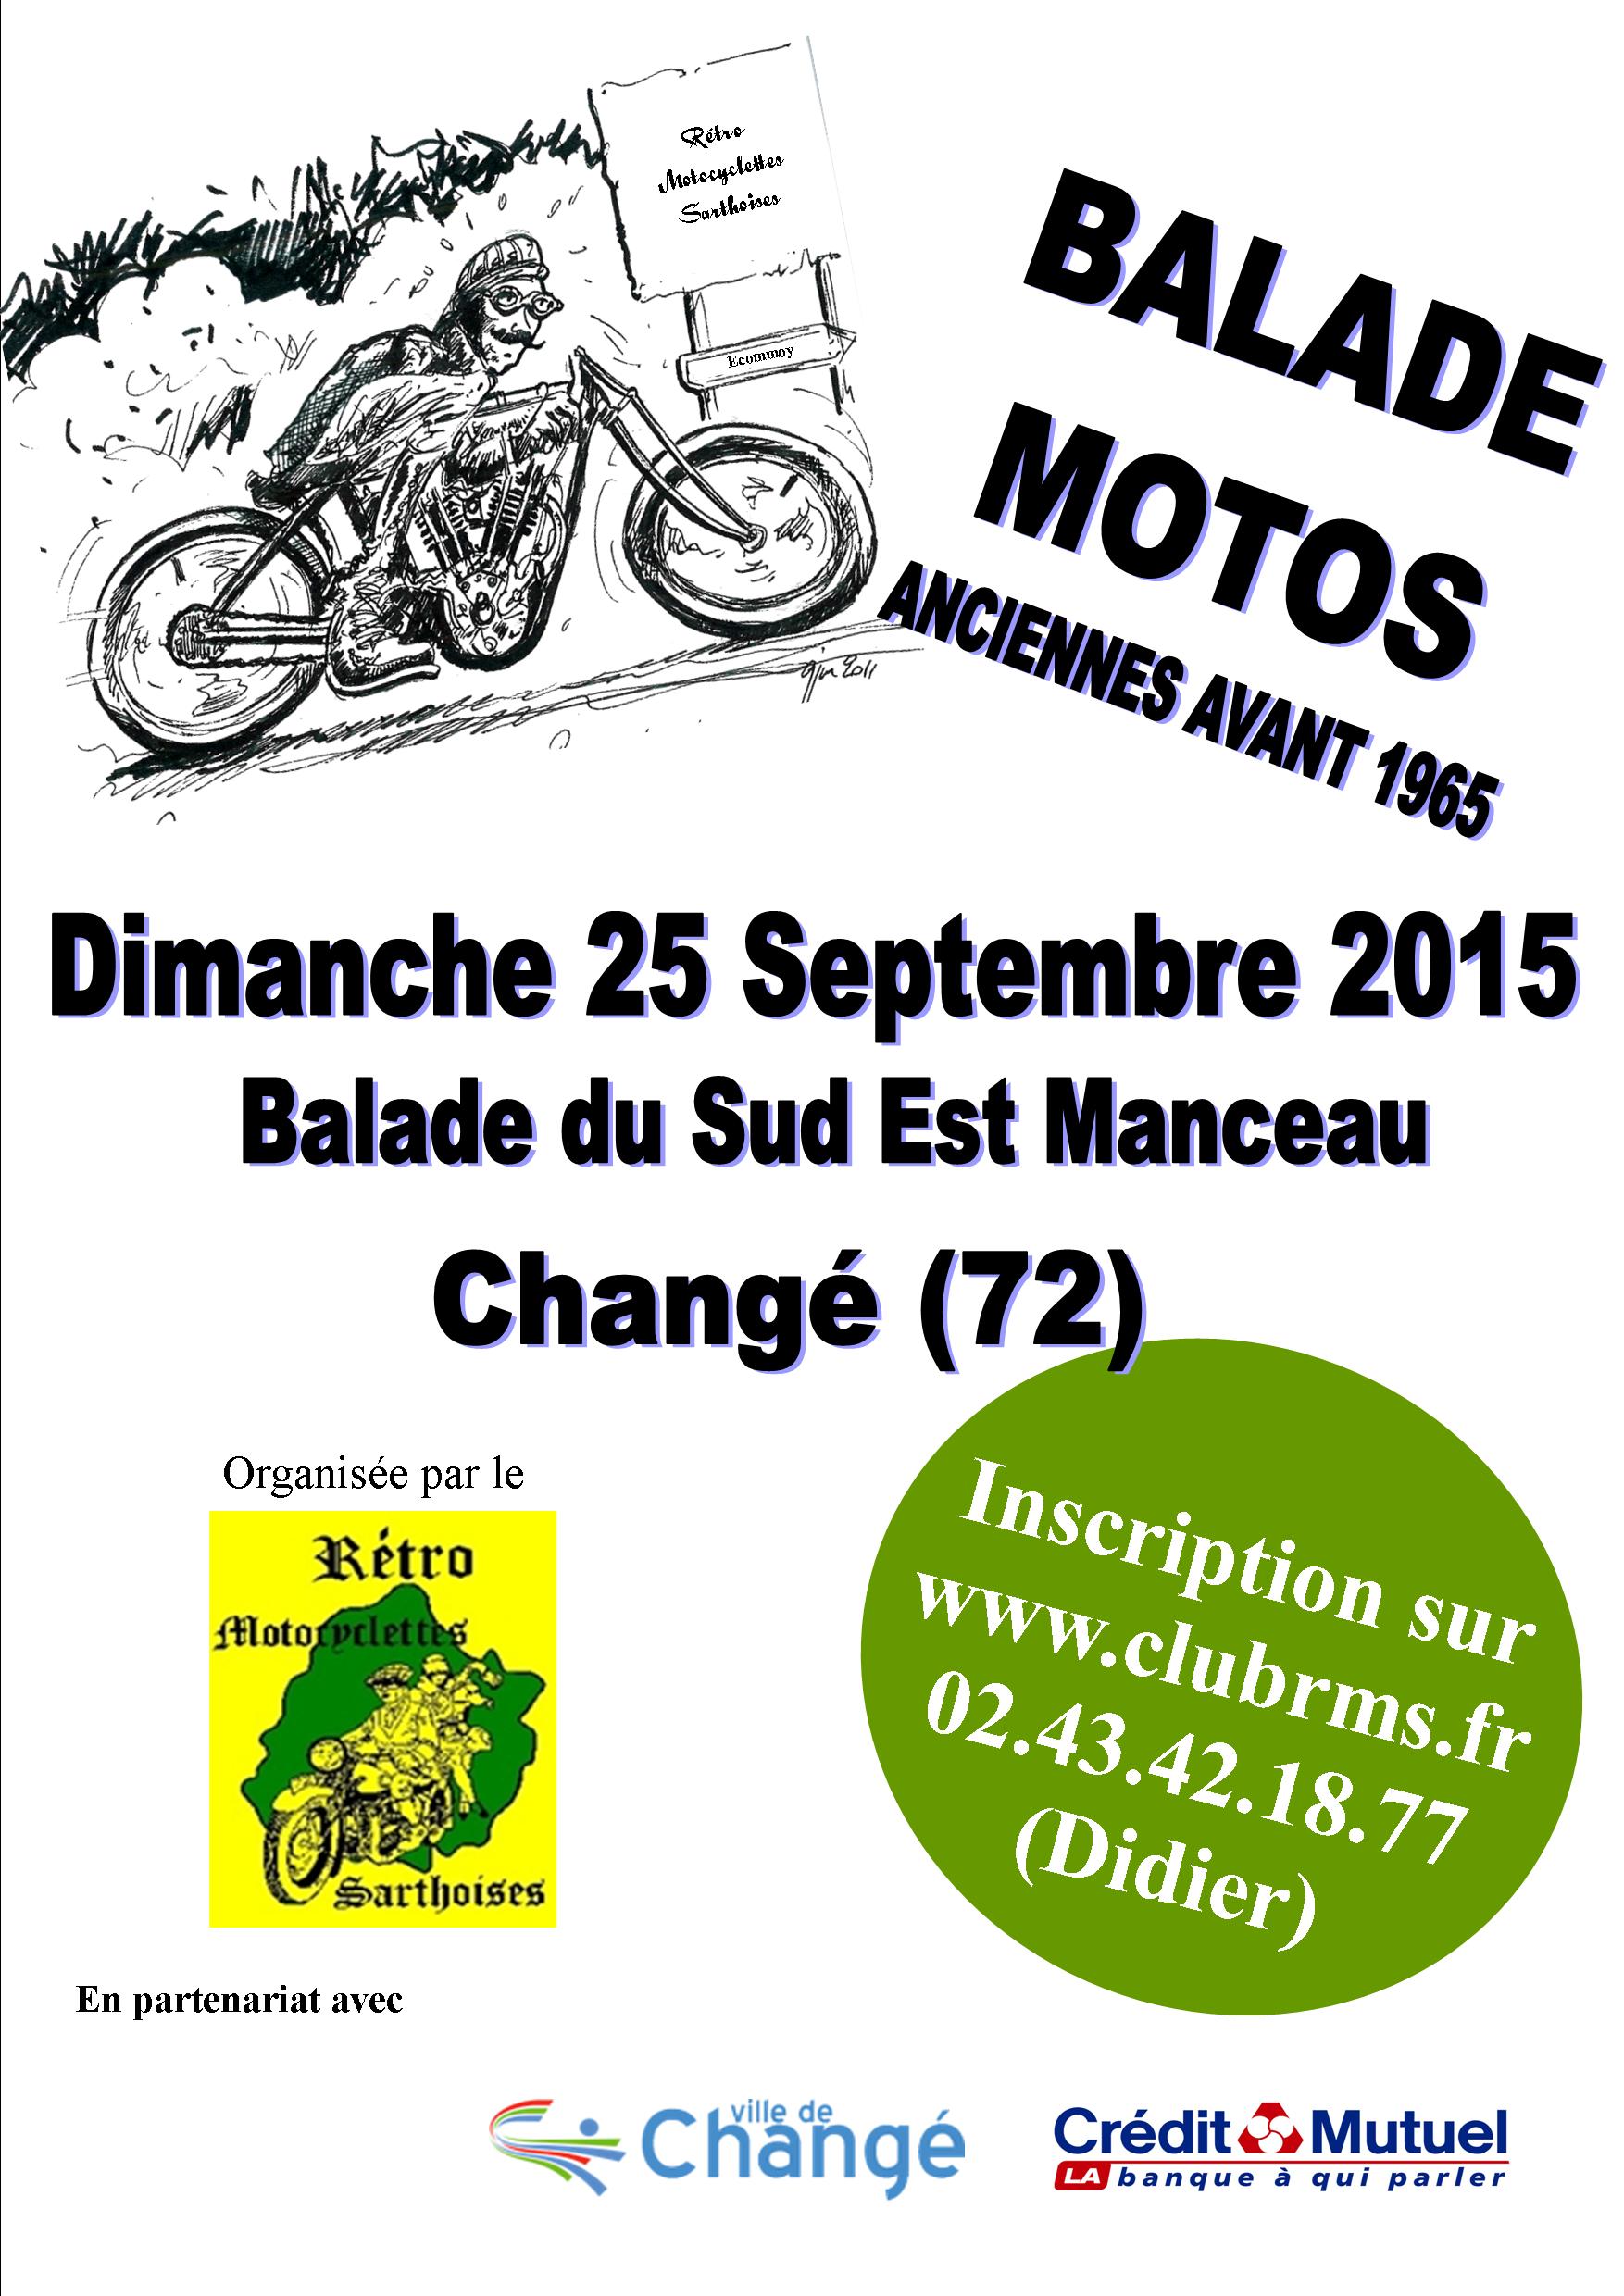 balade-automnale-pour-motos-av-1965-2016-09-25.jpg